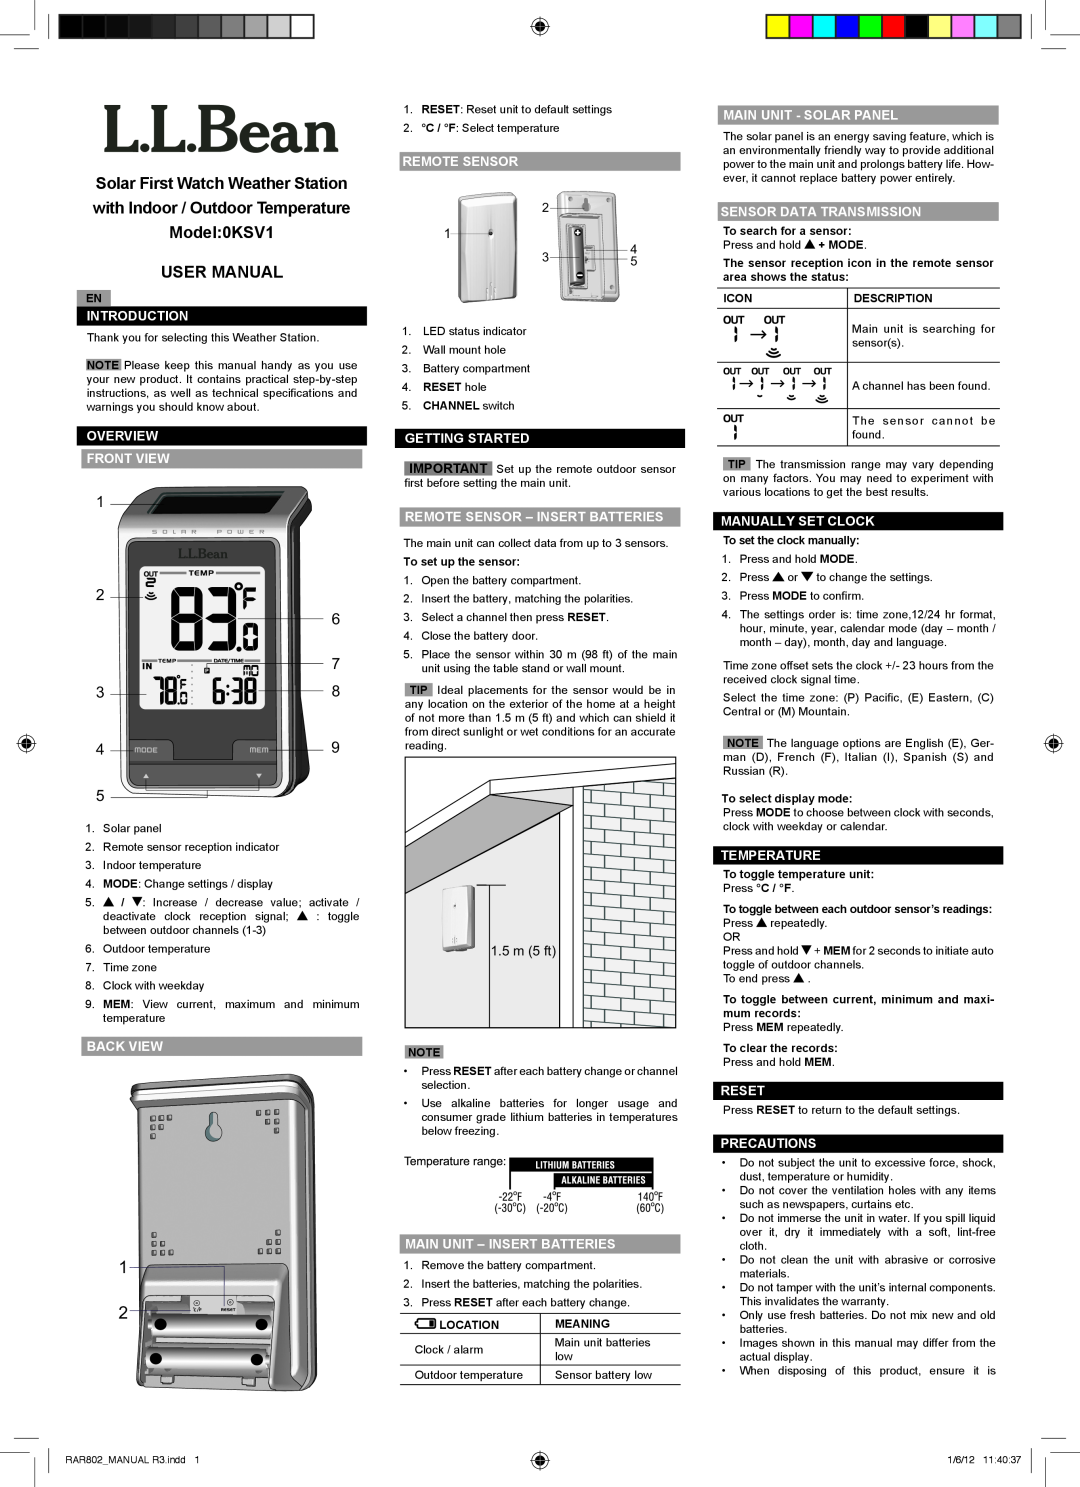 L.L. Bean OKSV1 user manual 